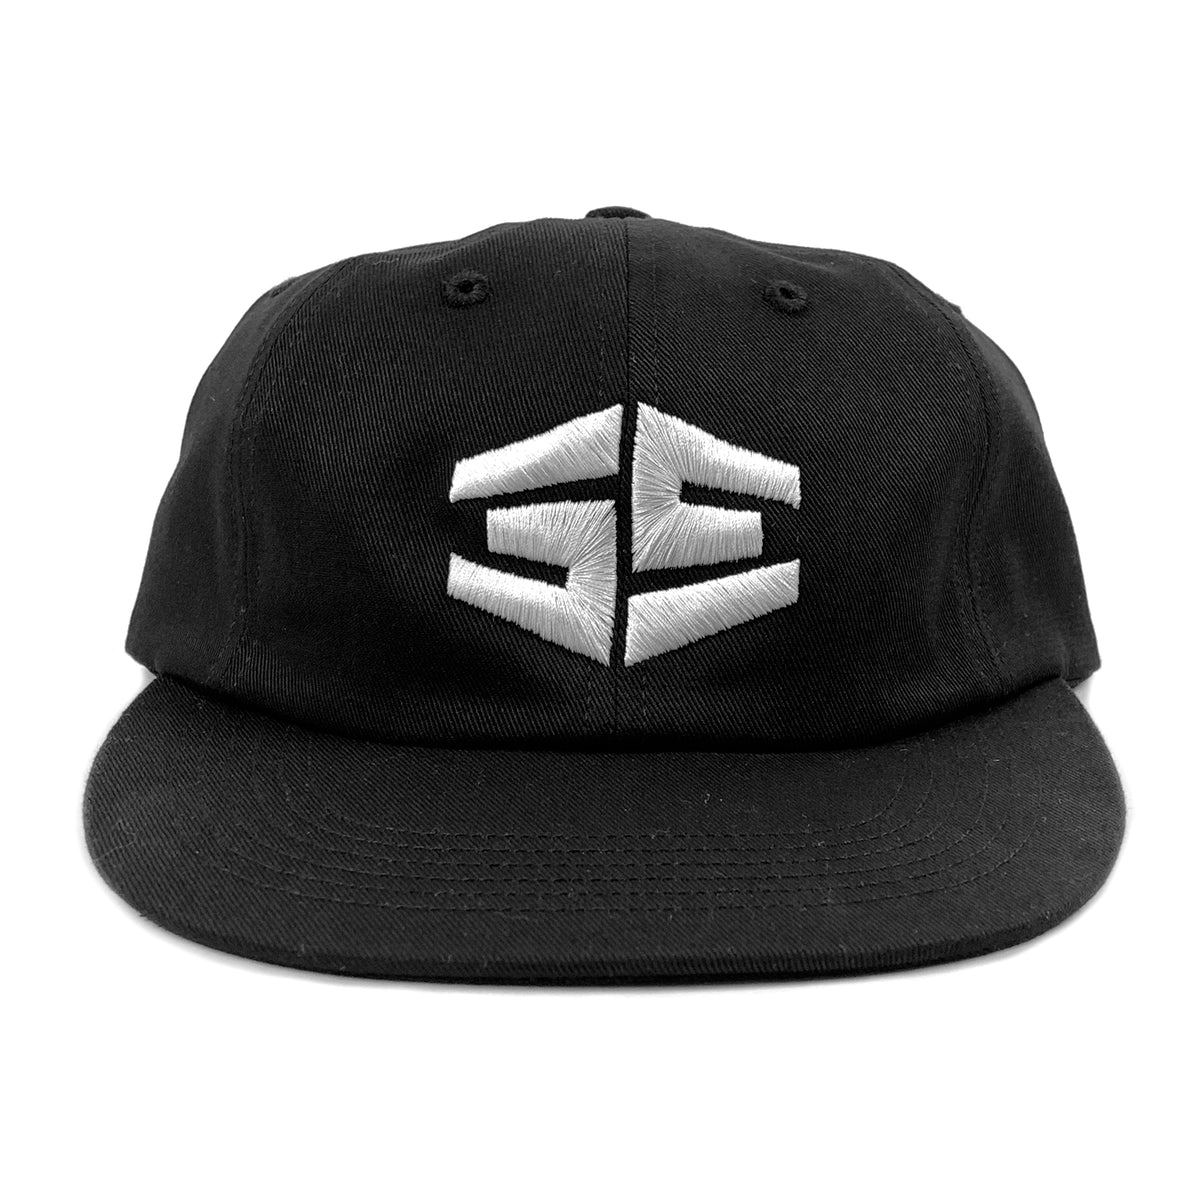 35th North Tron Strapback Hat - Black/White